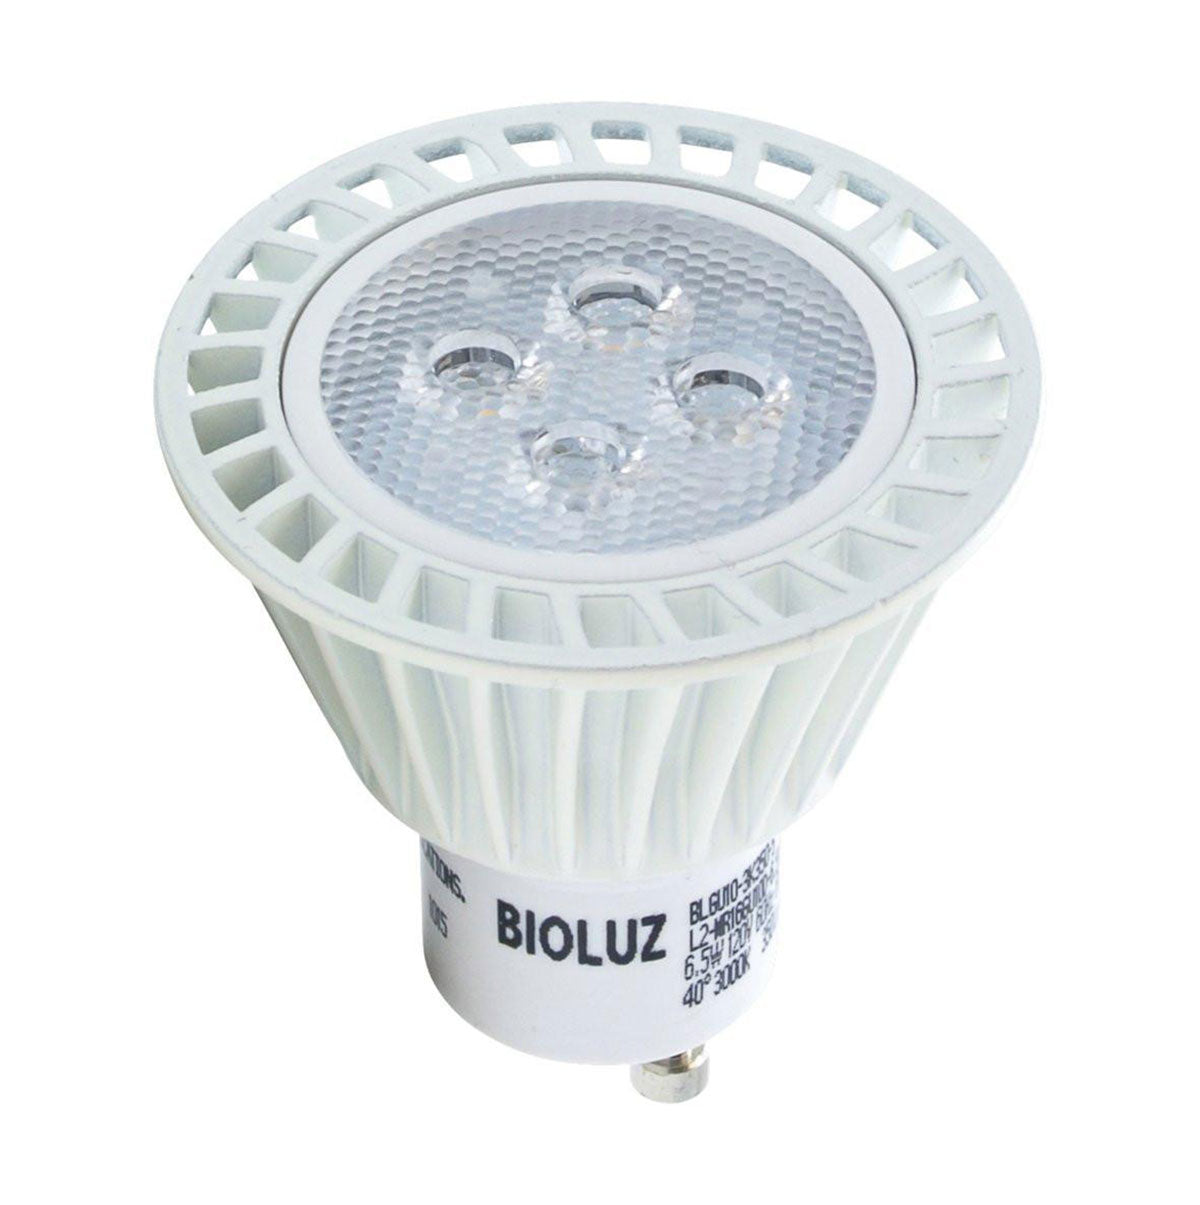 1-10pcs LED spot light GU10 AC120v 220v 3000k/4000k/6000k 3w-8w replacement  100W halogen lamp for kitchen studio bathroom